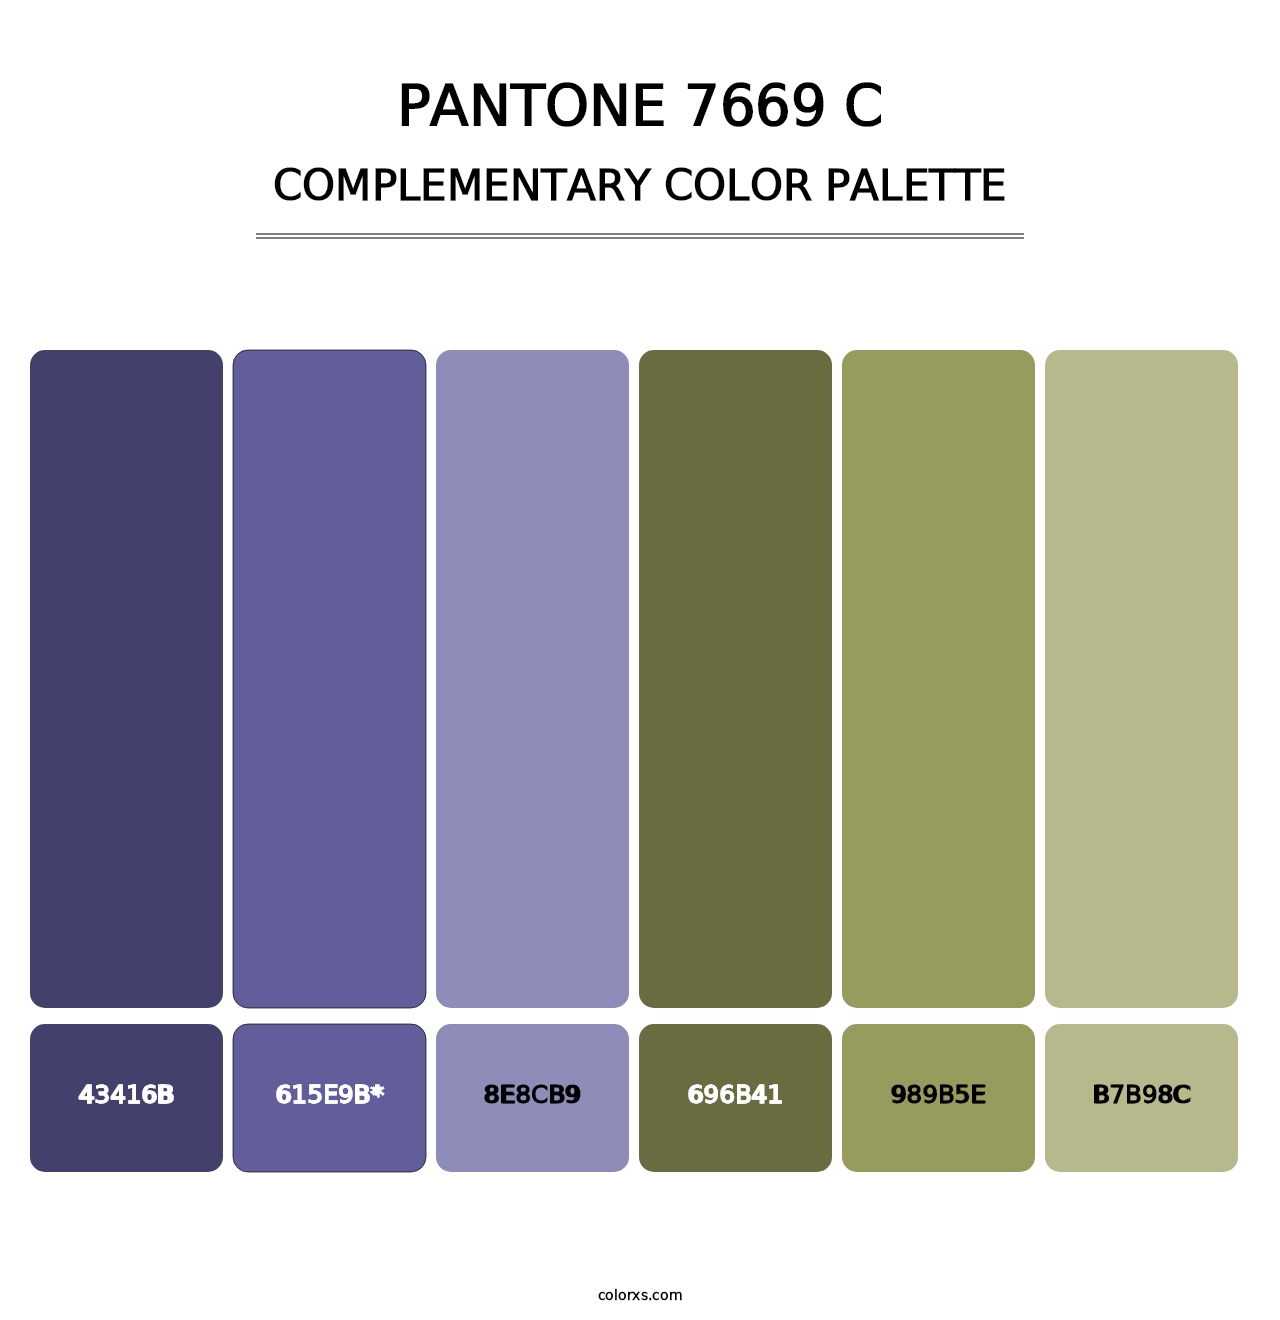 PANTONE 7669 C - Complementary Color Palette